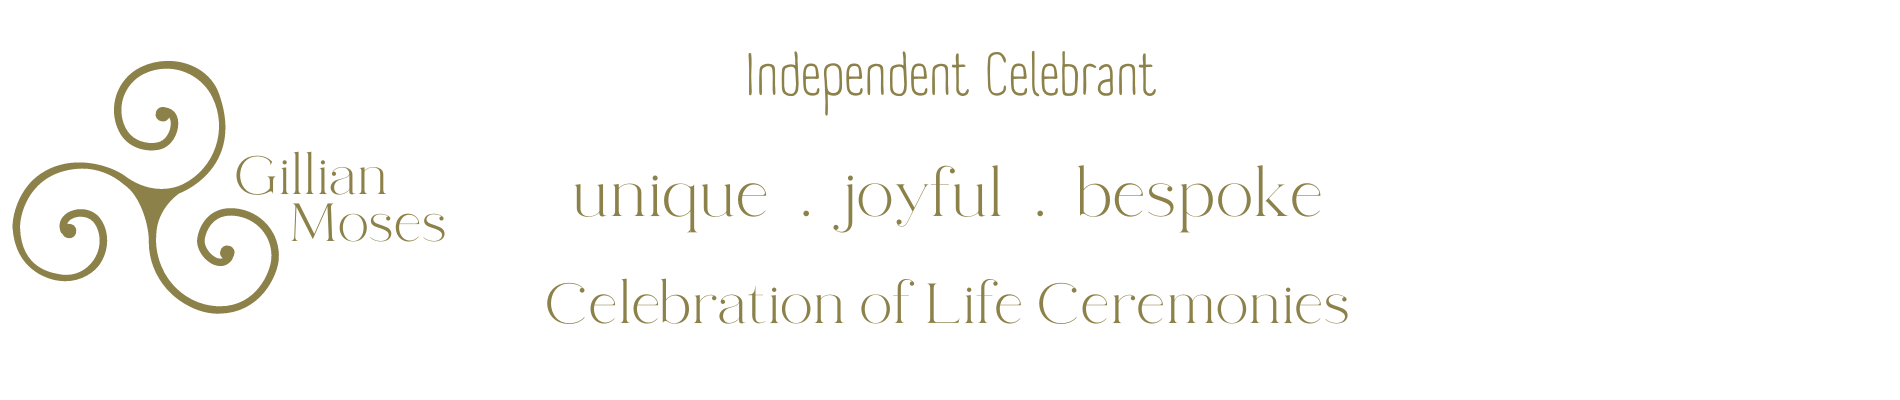 Gillian Moses Independent Celebrant offering unique, joyful, bespoke Celebration of Life Ceremonies